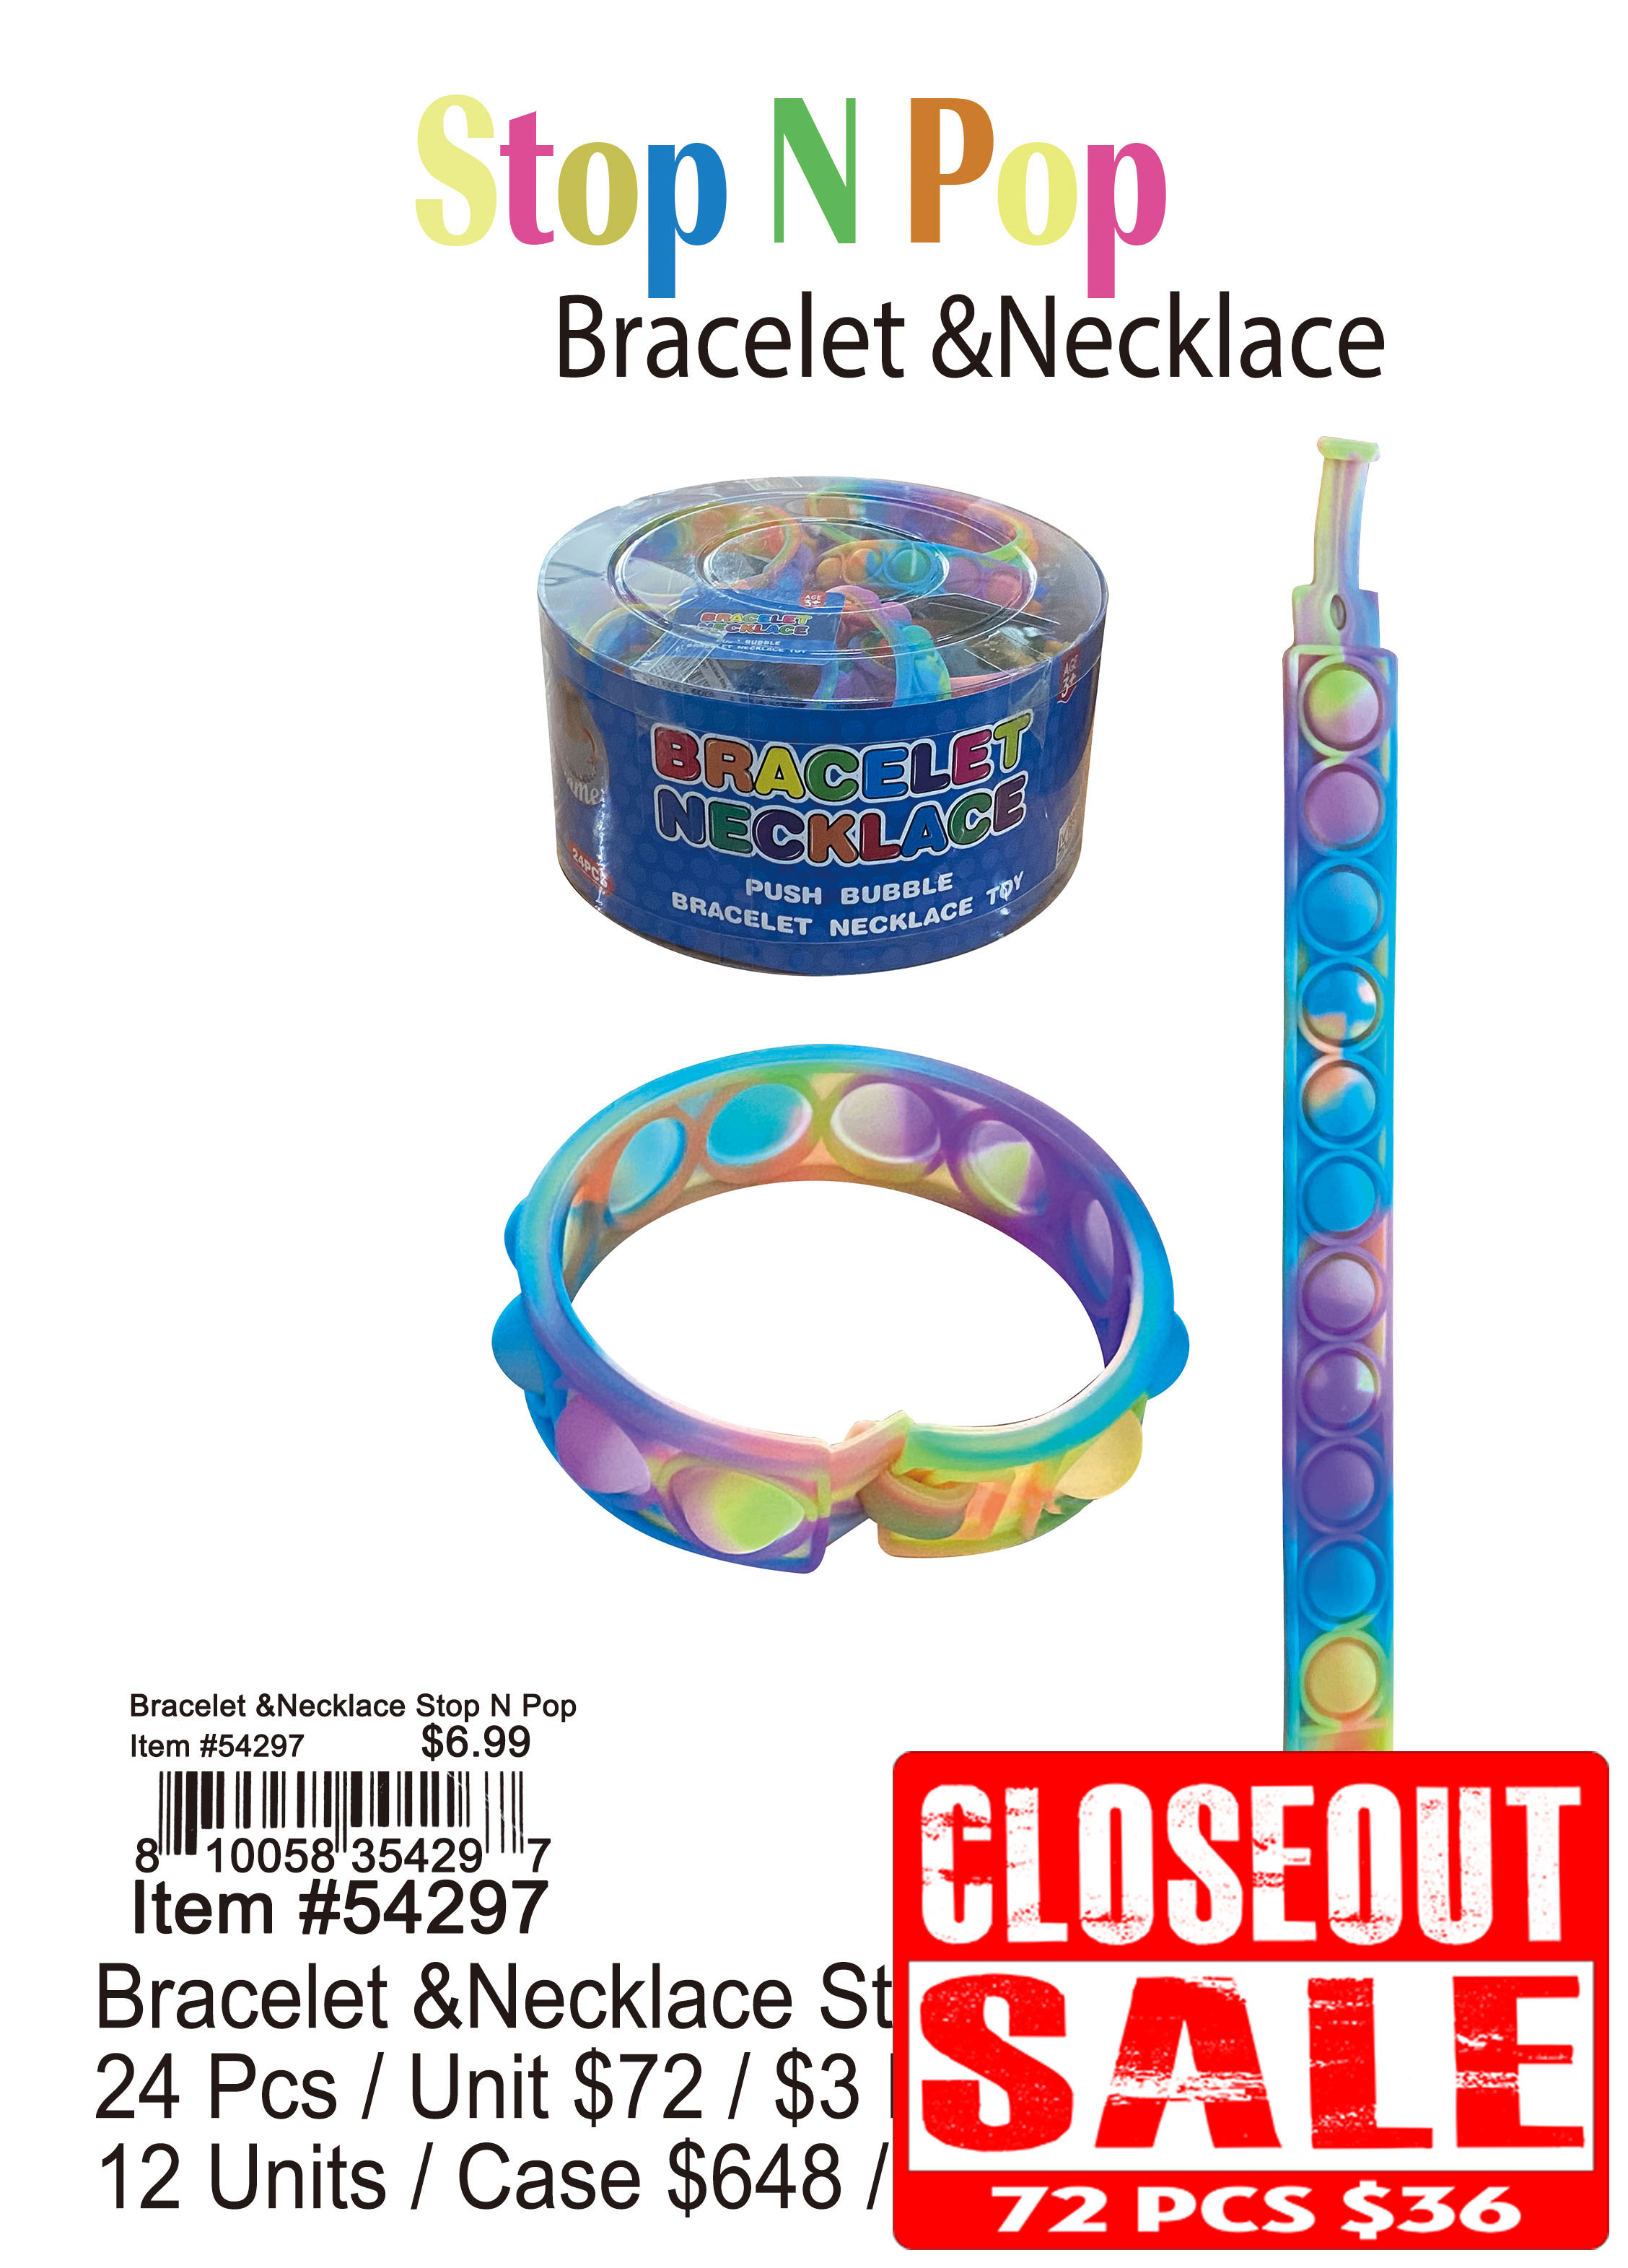 Bracelets and Necklace Stop N Pop (CL)